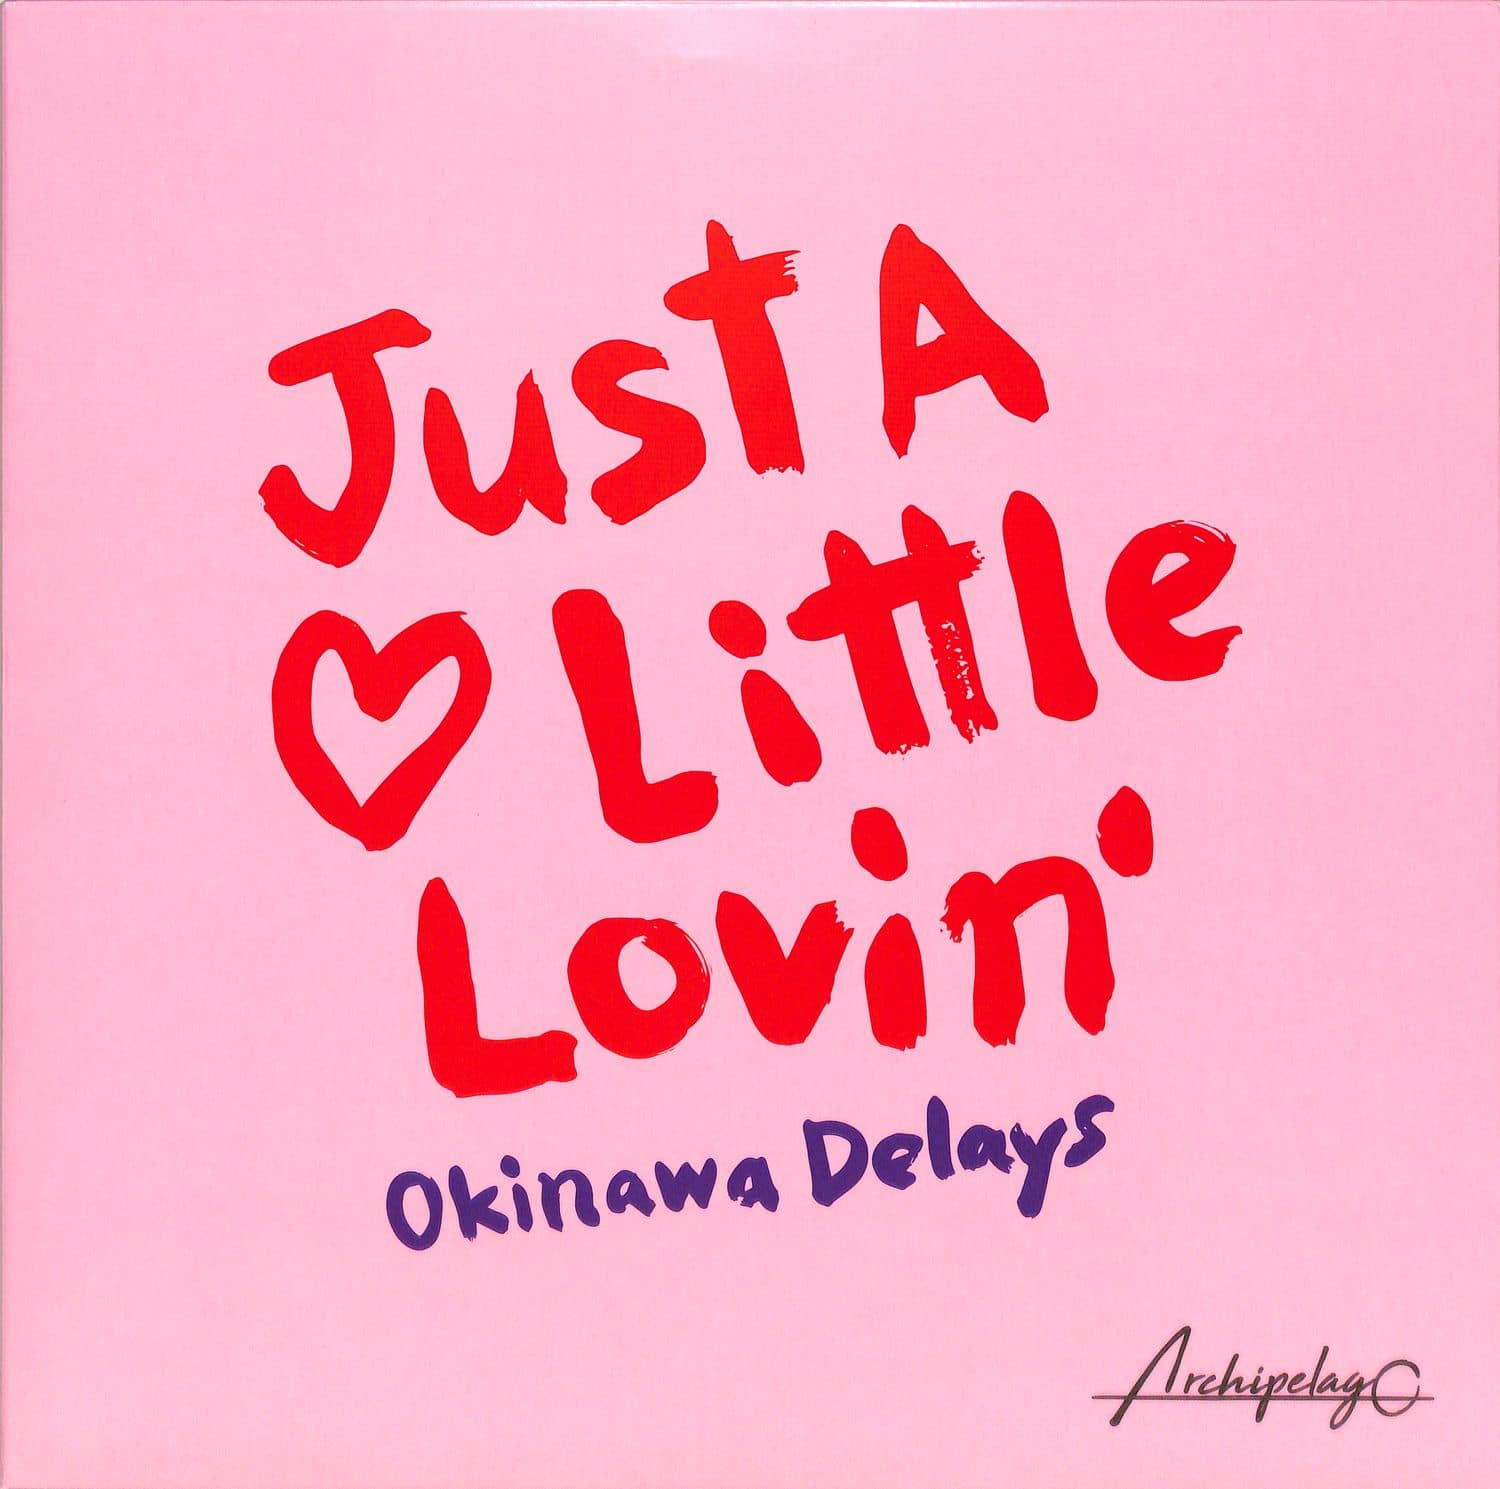 Okinawa Delays - JUST A LITTLE LOVIN EP